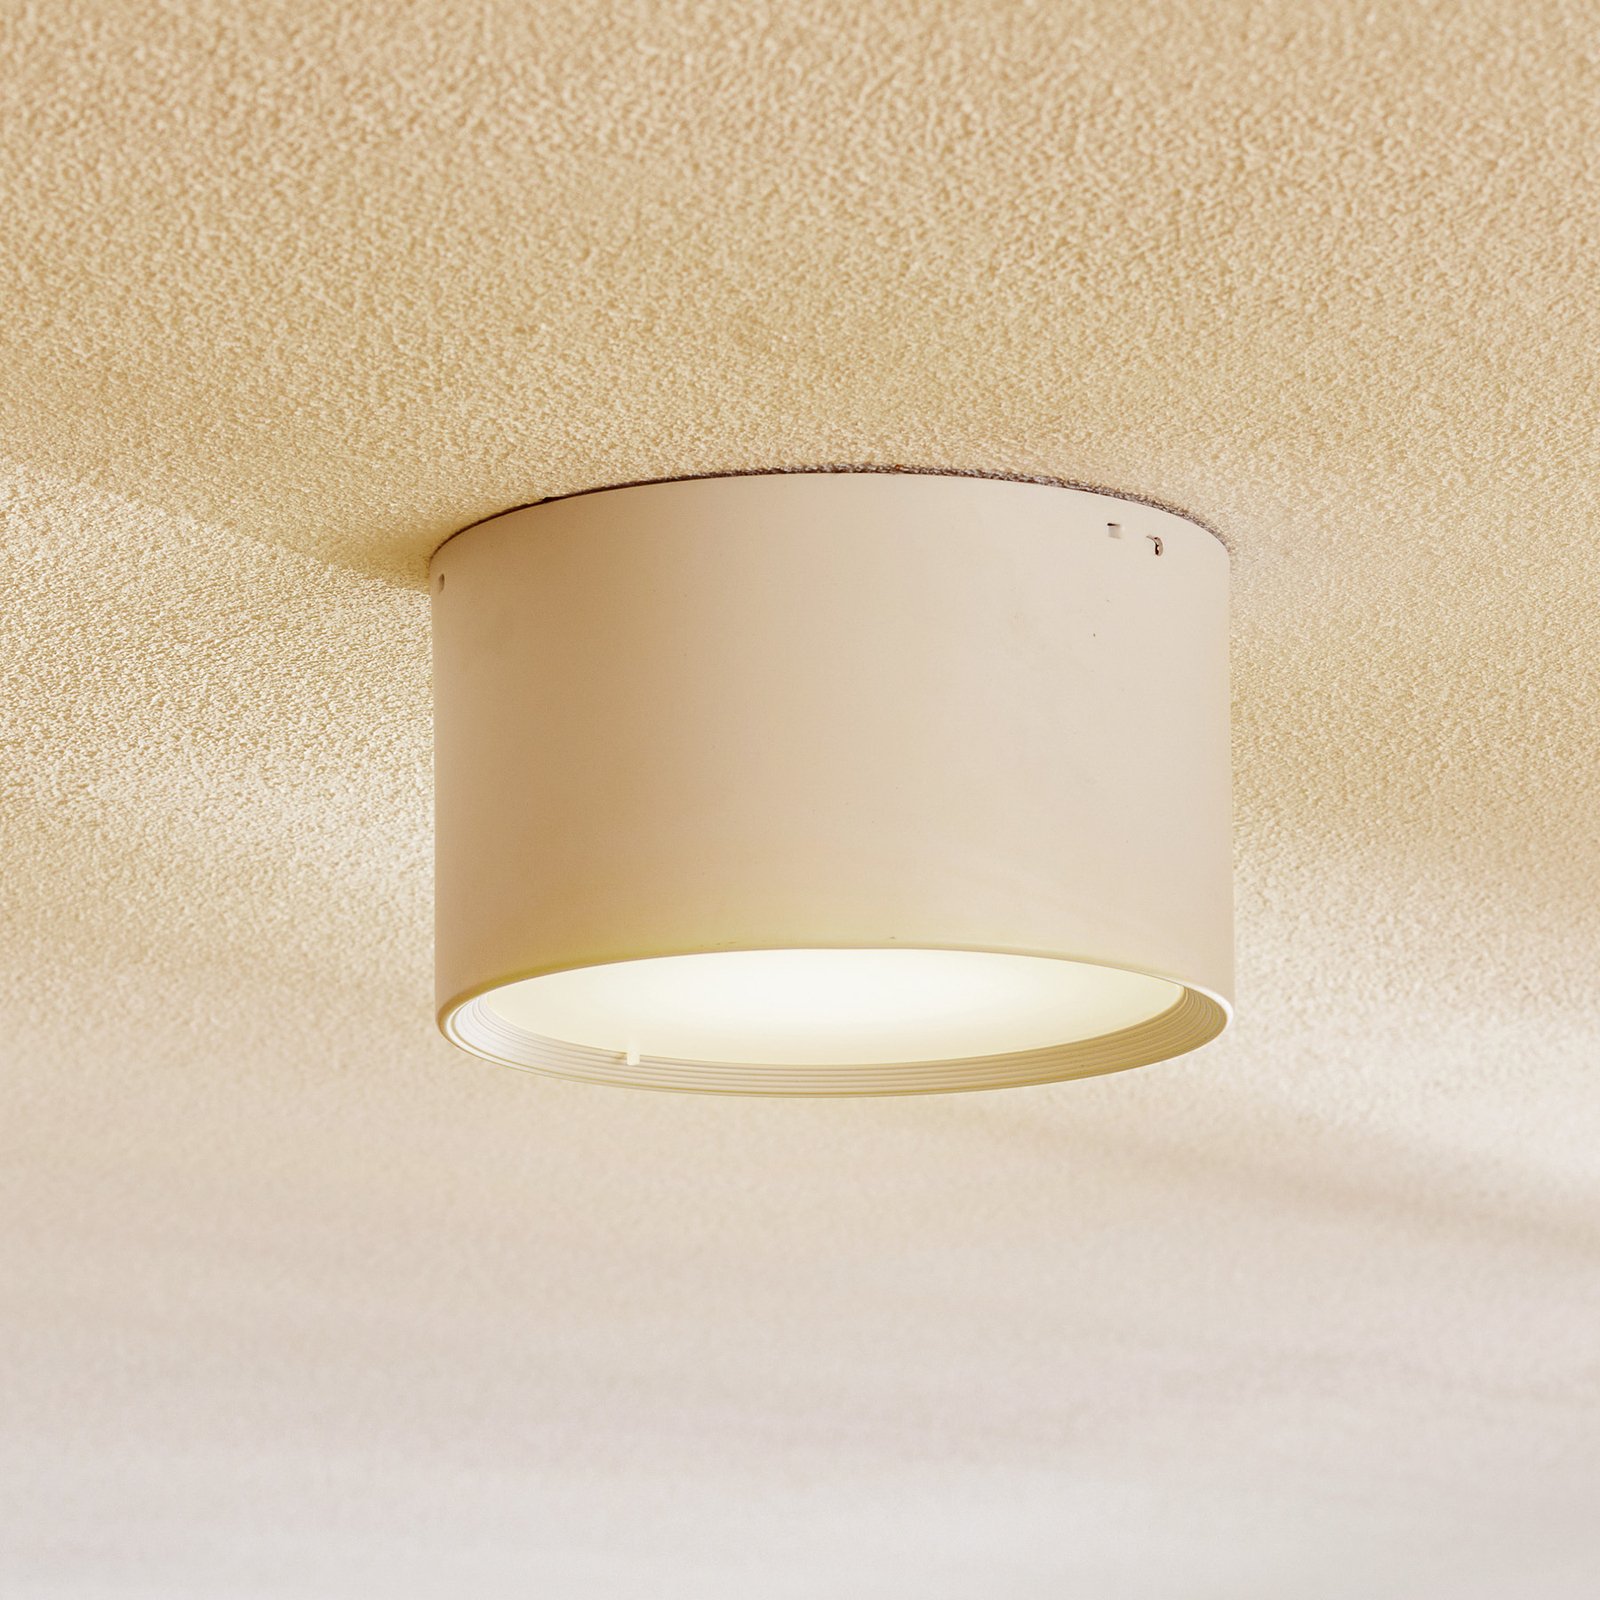 Ita LED downlight in wit met diffuser, Ø 15 cm